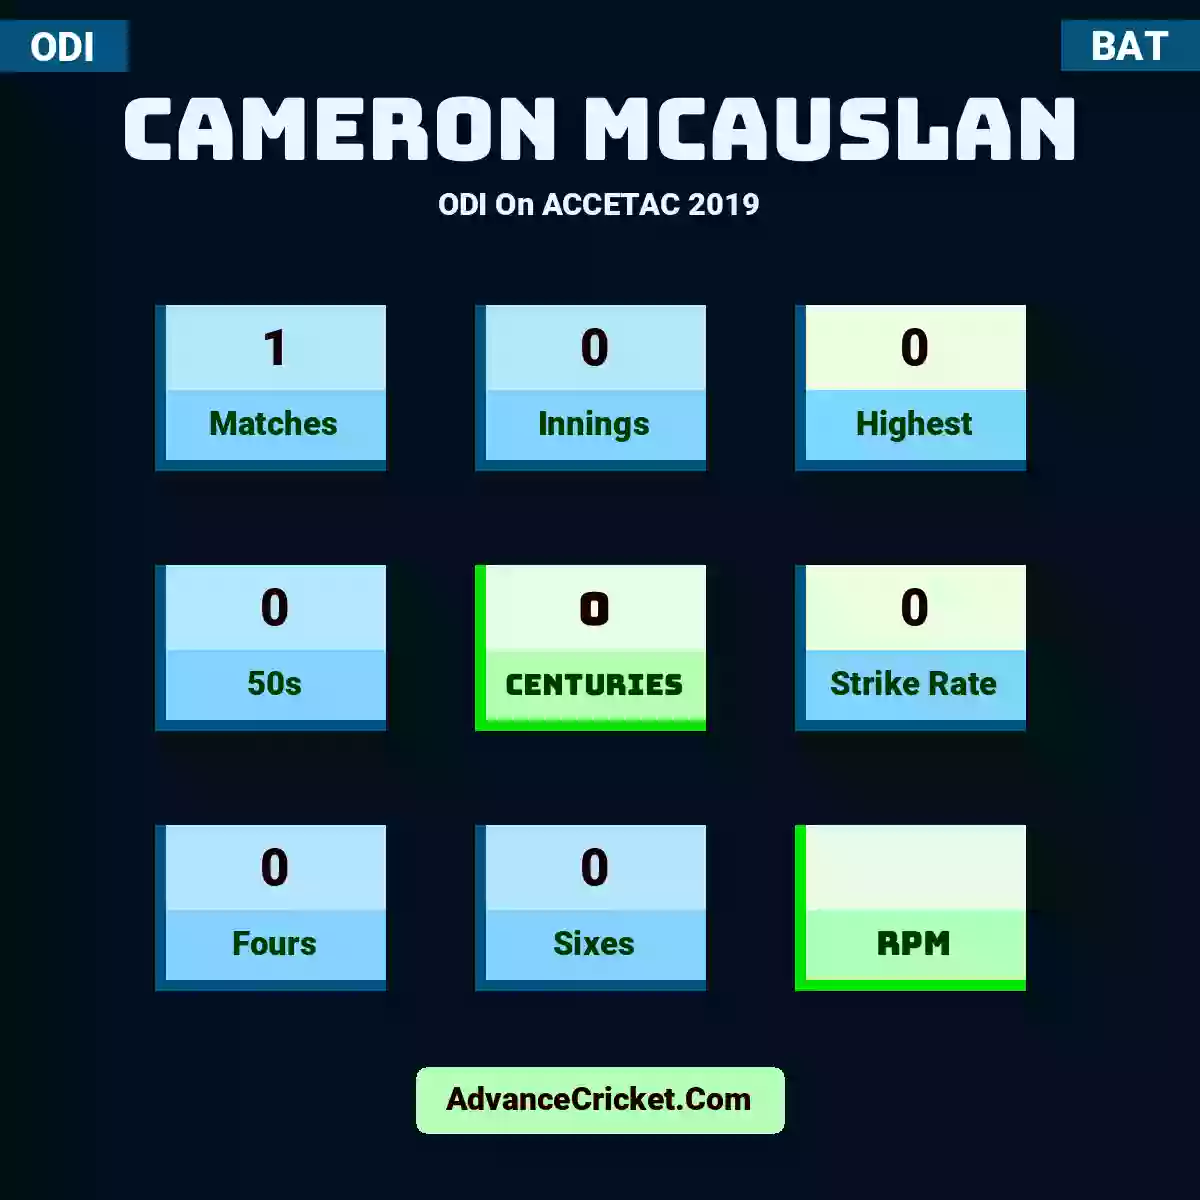 Cameron McAuslan ODI  On ACCETAC 2019, Cameron McAuslan played 1 matches, scored 0 runs as highest, 0 half-centuries, and 0 centuries, with a strike rate of 0. C.McAuslan hit 0 fours and 0 sixes.